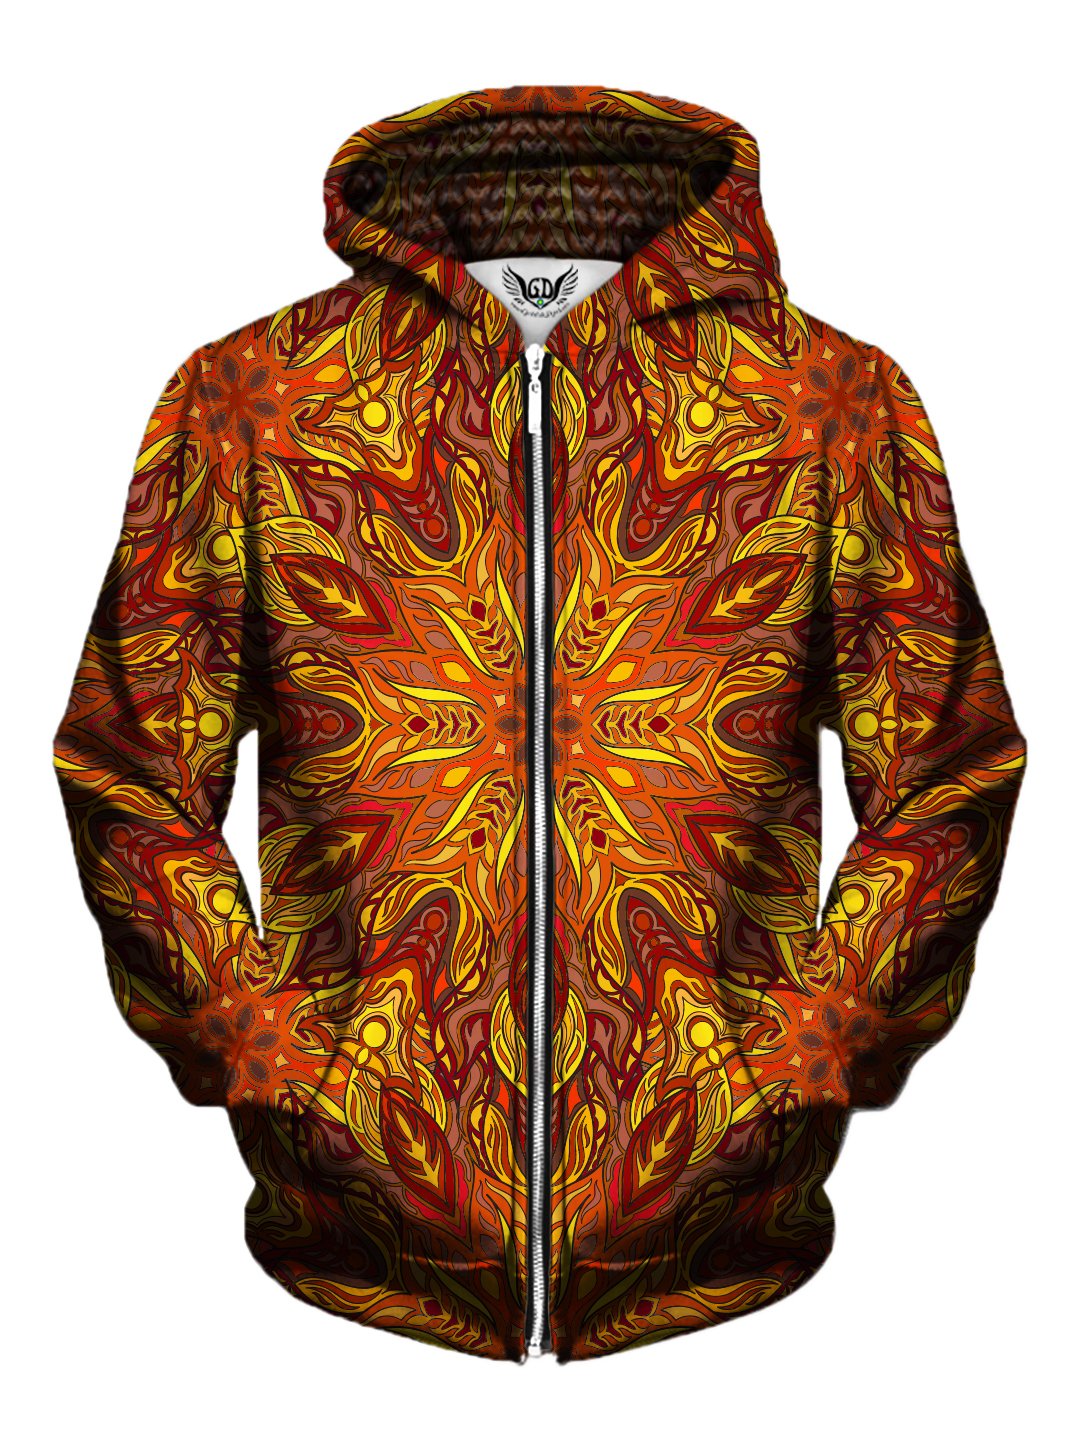 Men's red, orange & yellow fire mandala zip-up hoodie front view.